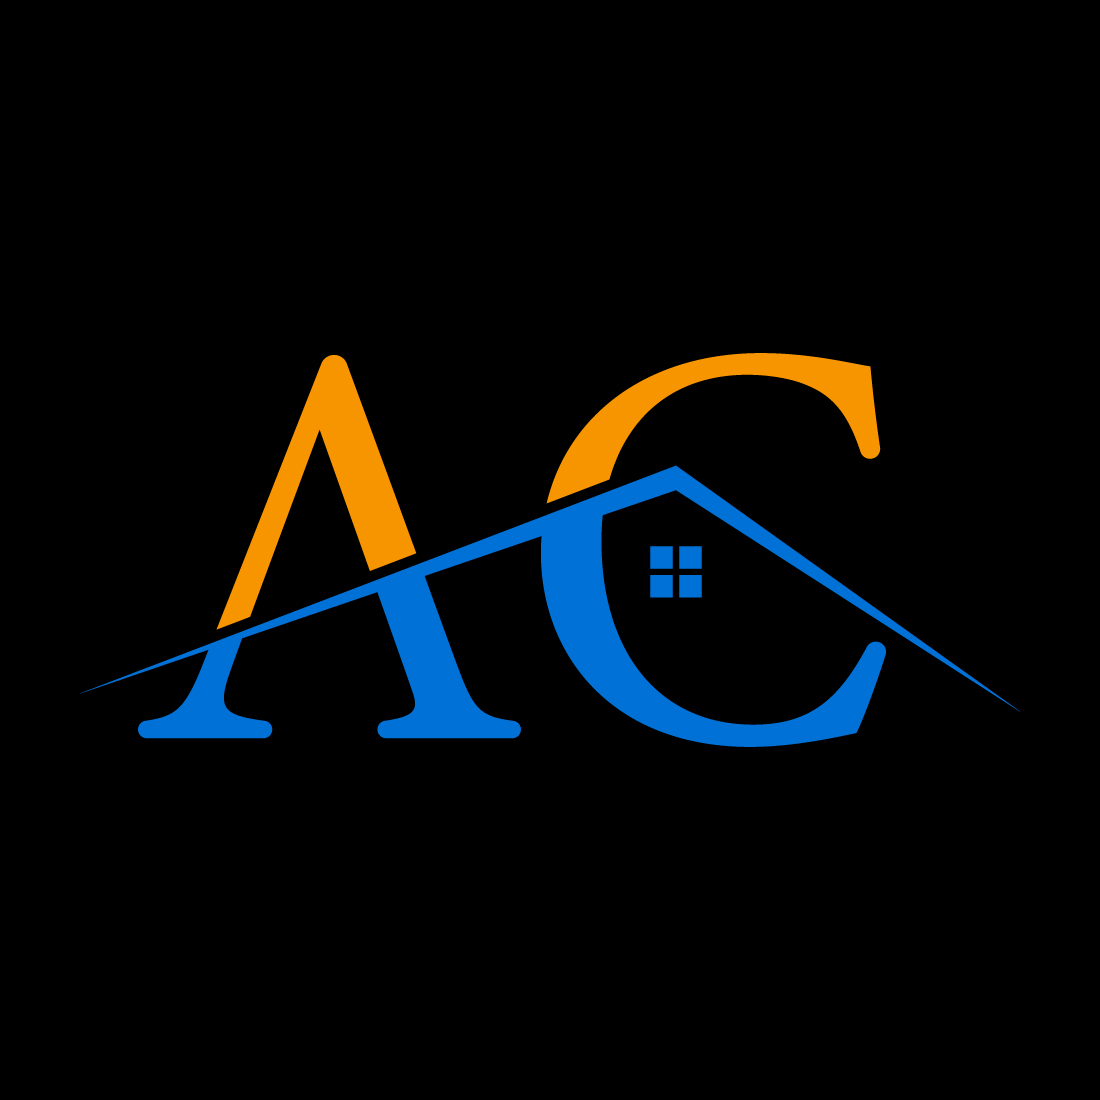 Initial AC Letter logo design, Vector design concept cover image.